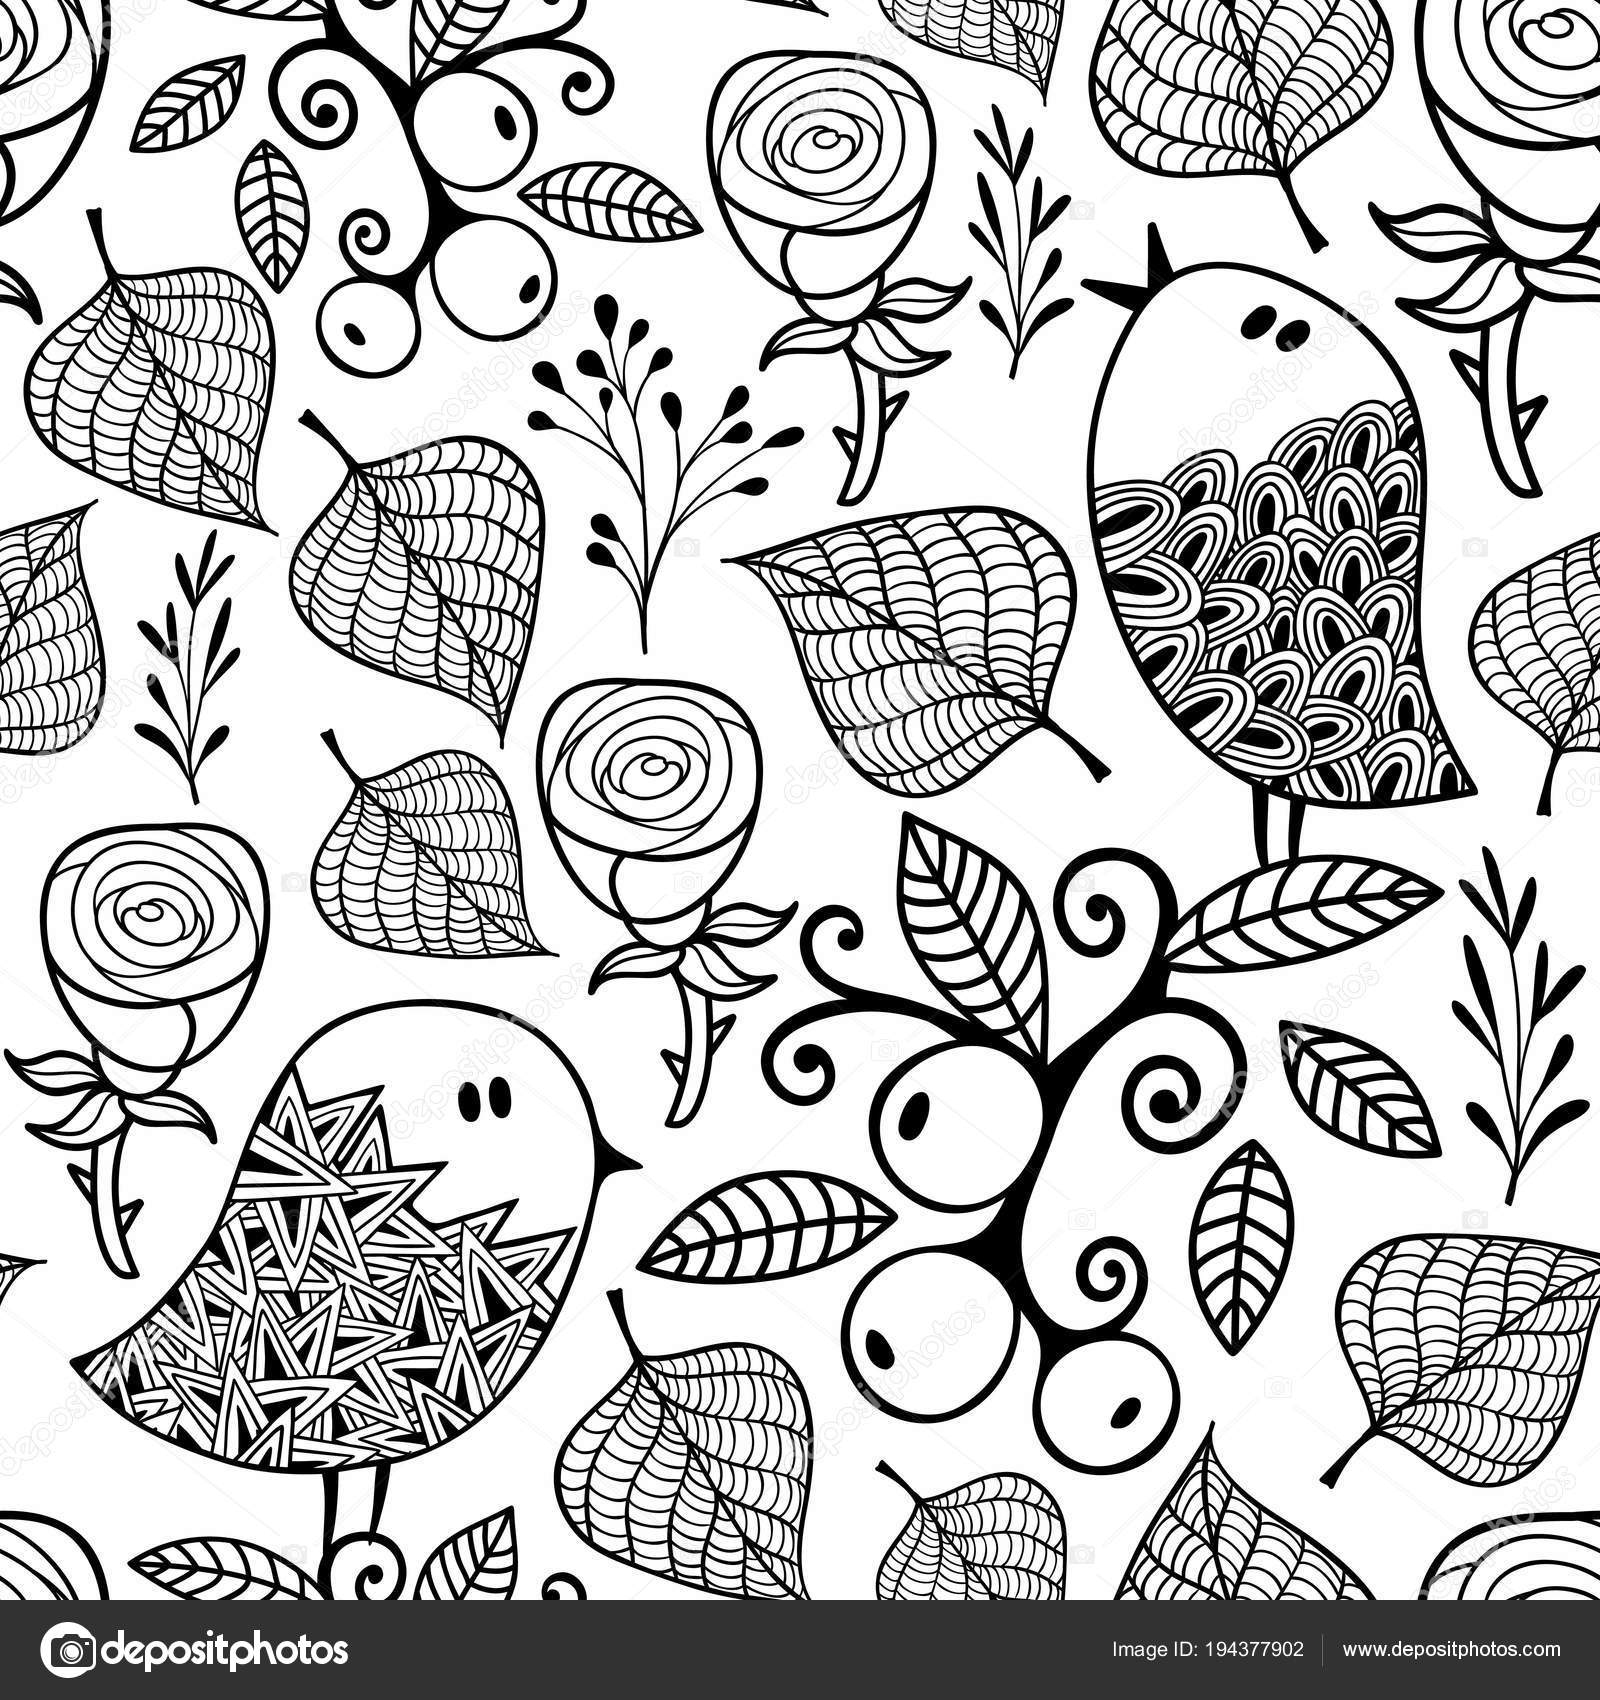 Black White Seamless Pattern Doodle Nature Elements Vector Artisic Background Stock Vector Image ©ekapanova #194377902